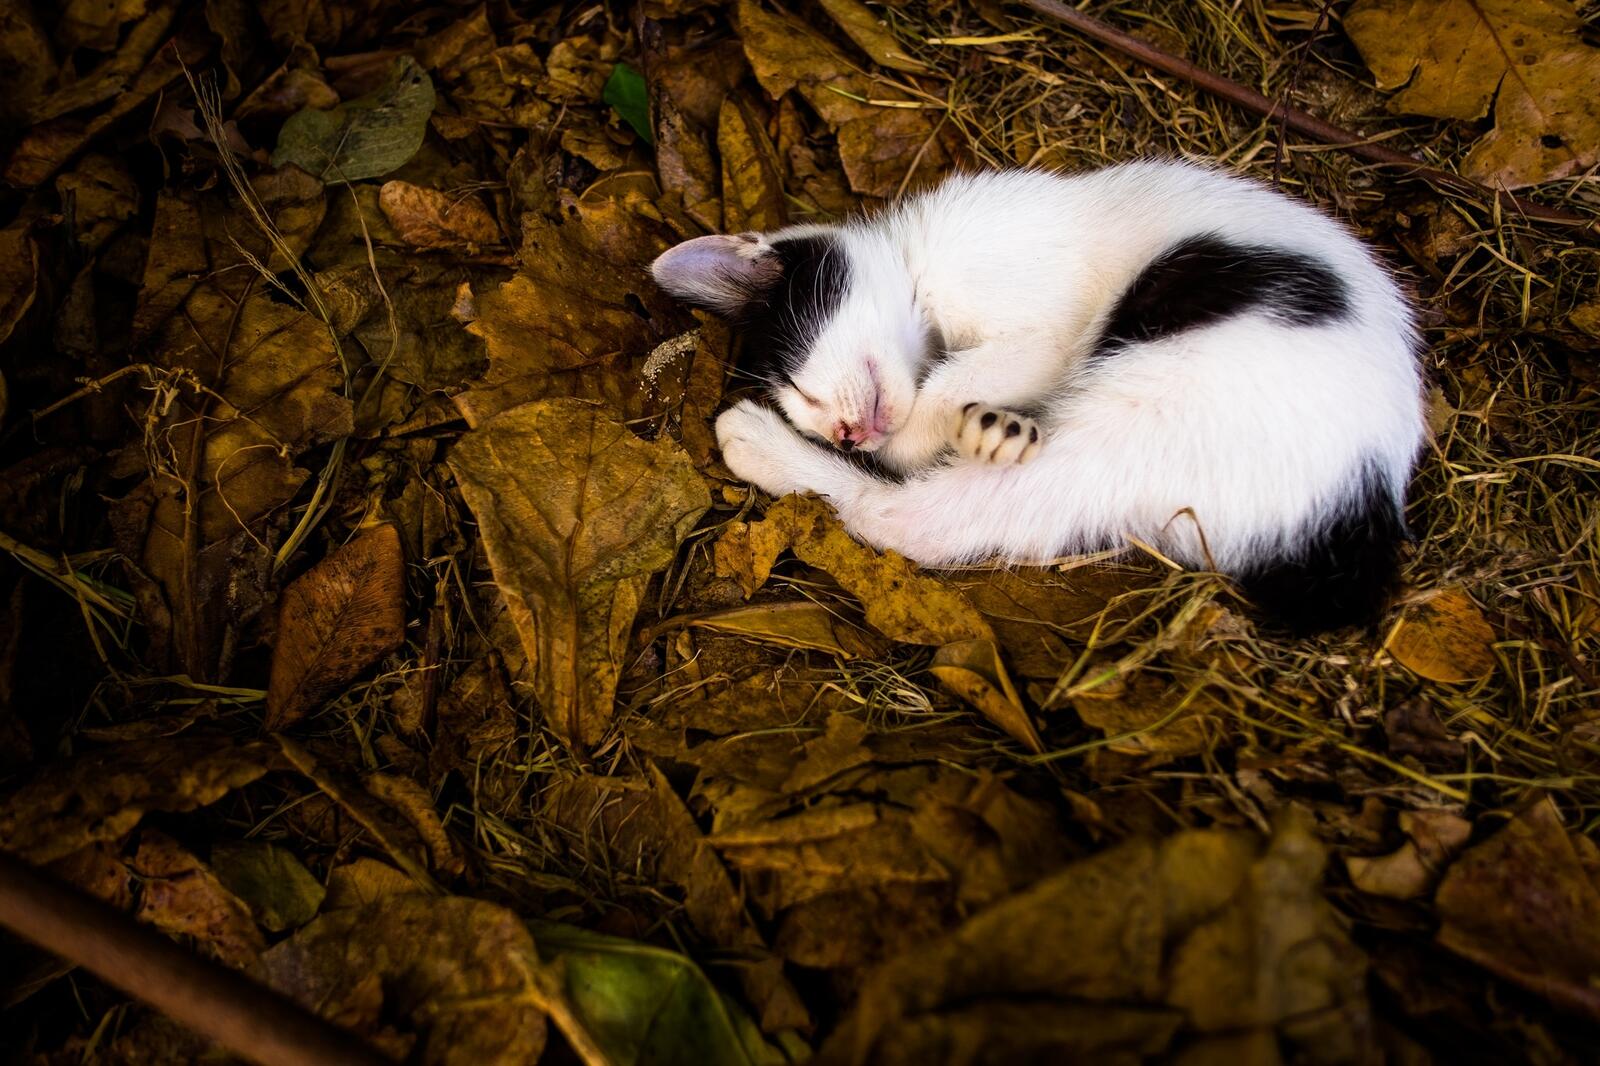 Free photo A little black and white kitten sleeps on fallen leaves